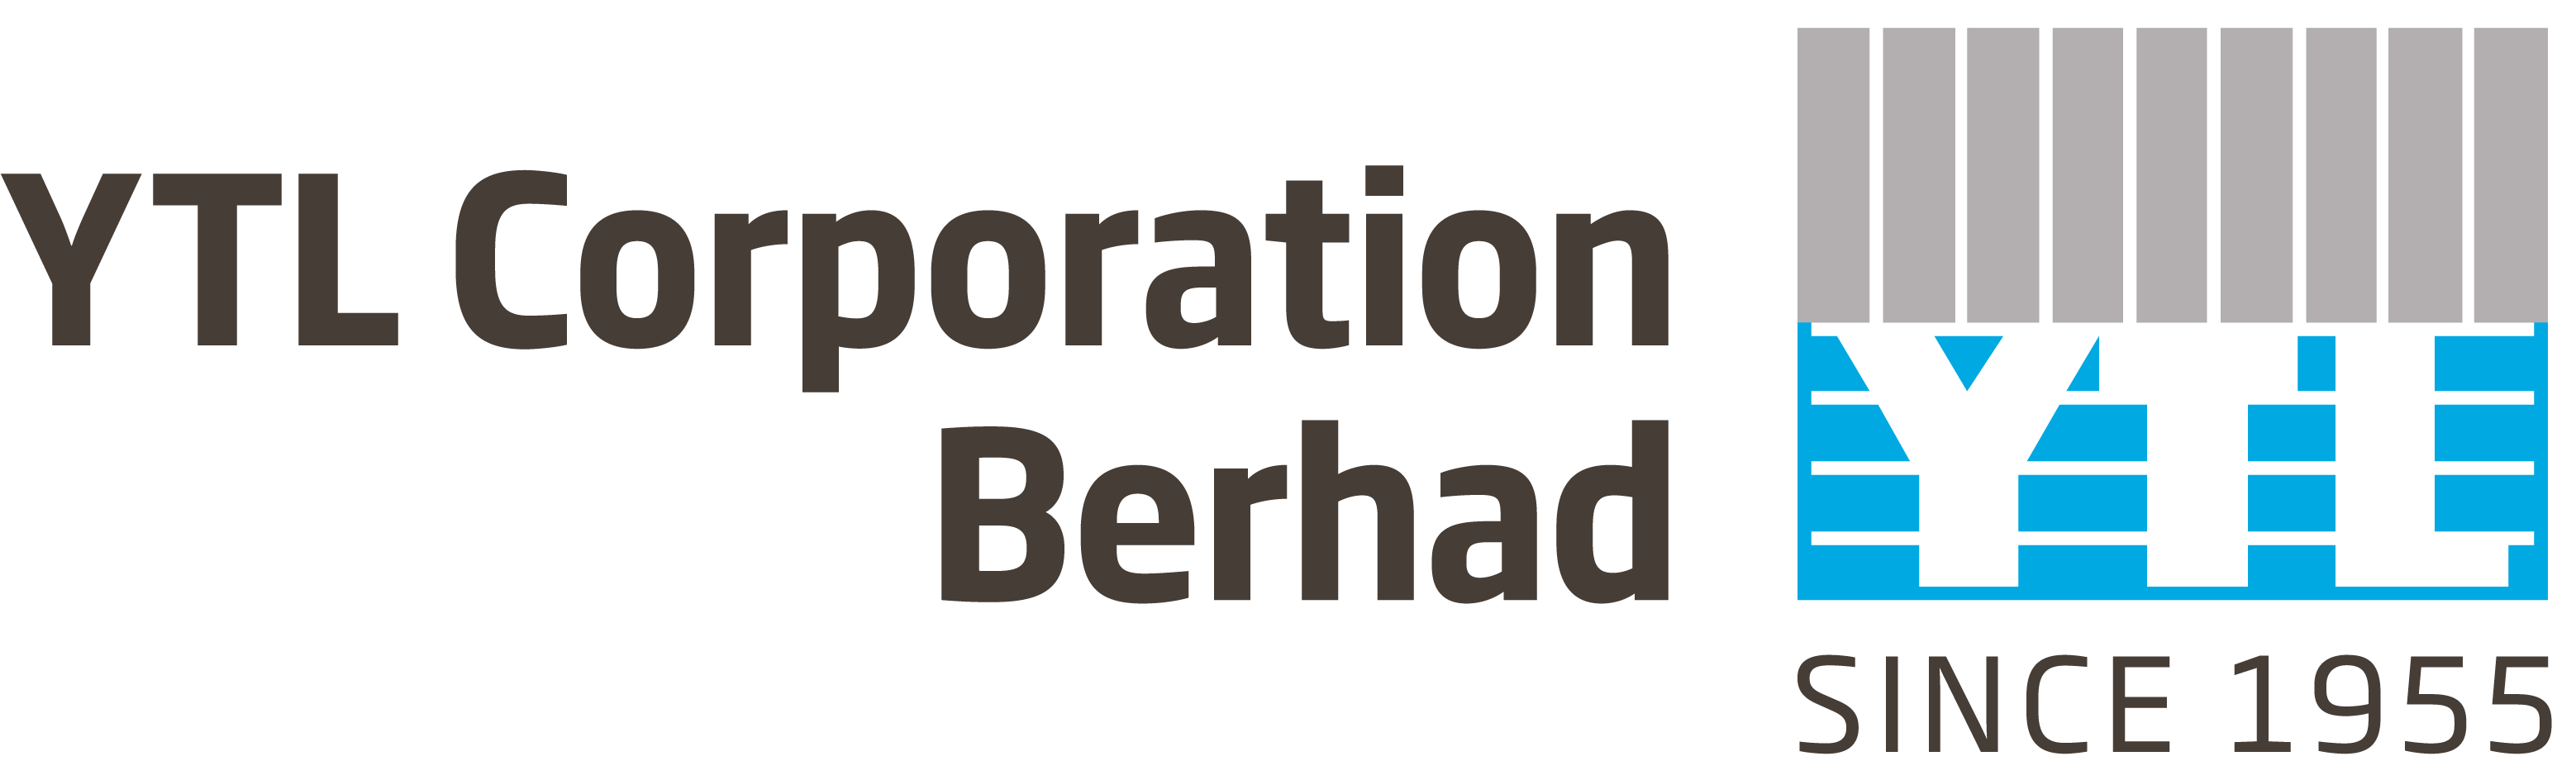 YTL Corporation Berhad logo large (transparent PNG)